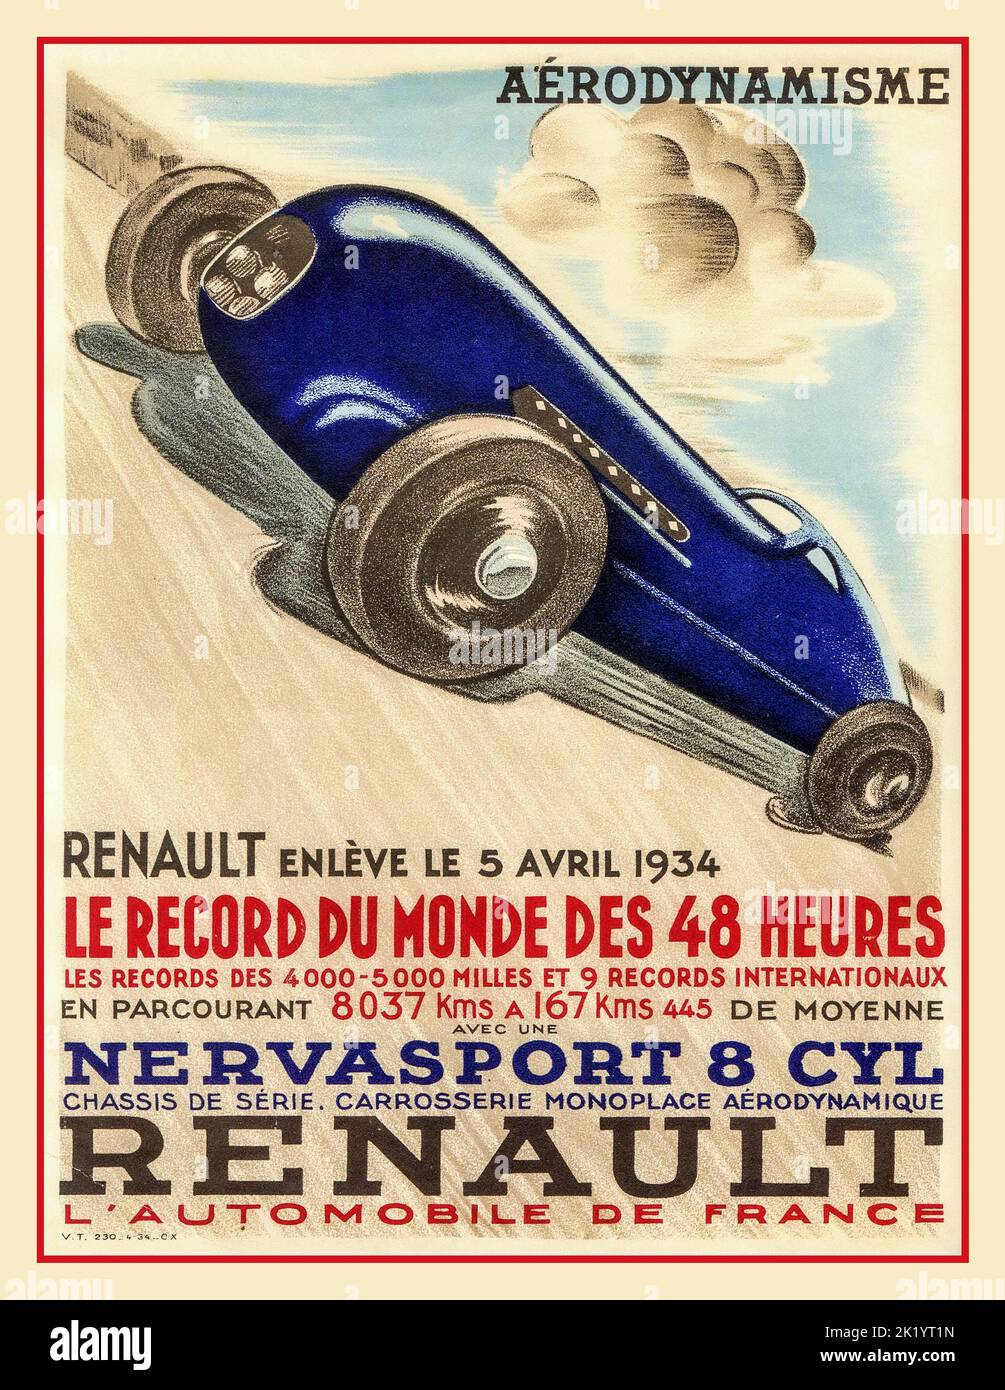 1934 Renault Vintage Motor Racing Sport Cartel Le Record de Monde des 48 Heures 'NERVAPORT 8cyl RENAULT Aerodynamisme Abril 1934 Foto de stock